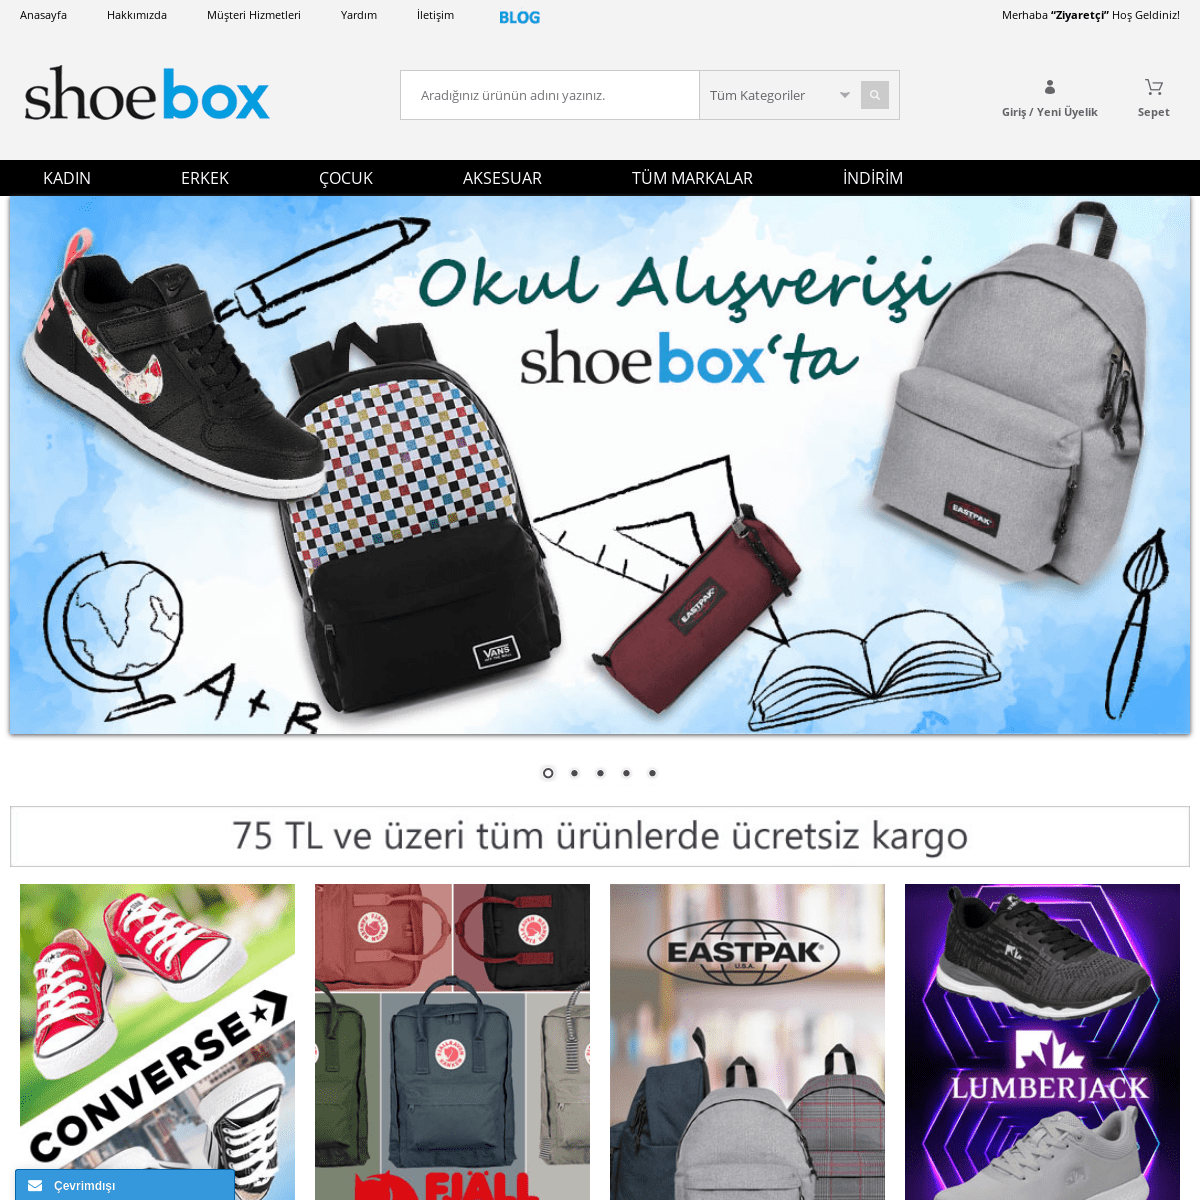 A complete backup of shoebox.com.tr